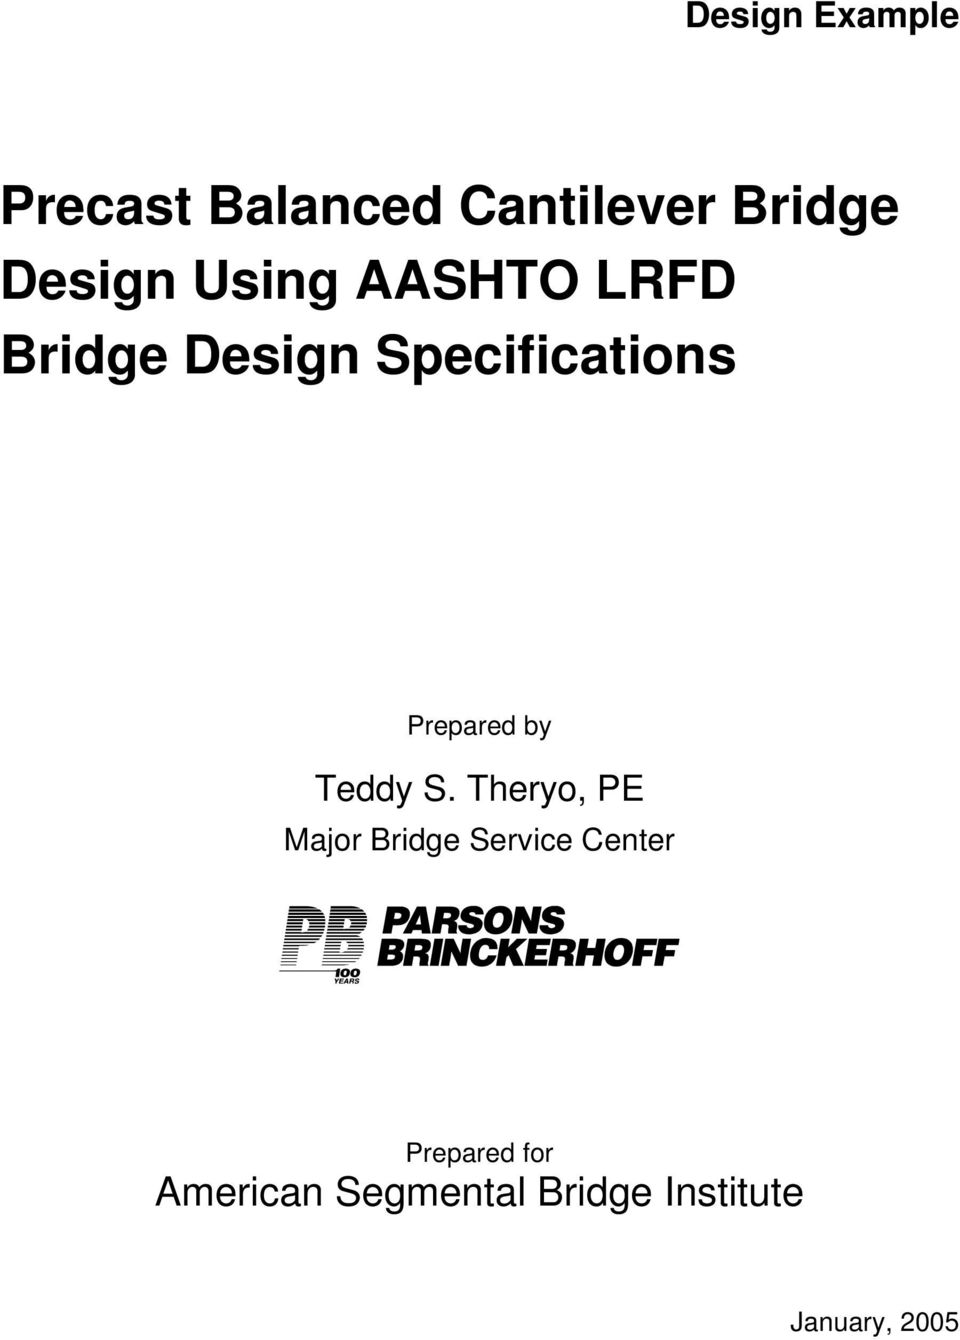 Precast Balanced Cantilever Bridge Design Using Aashto Lrfd Bridge Design Specifications Pdf Free Download,Apple Green Living Room Design